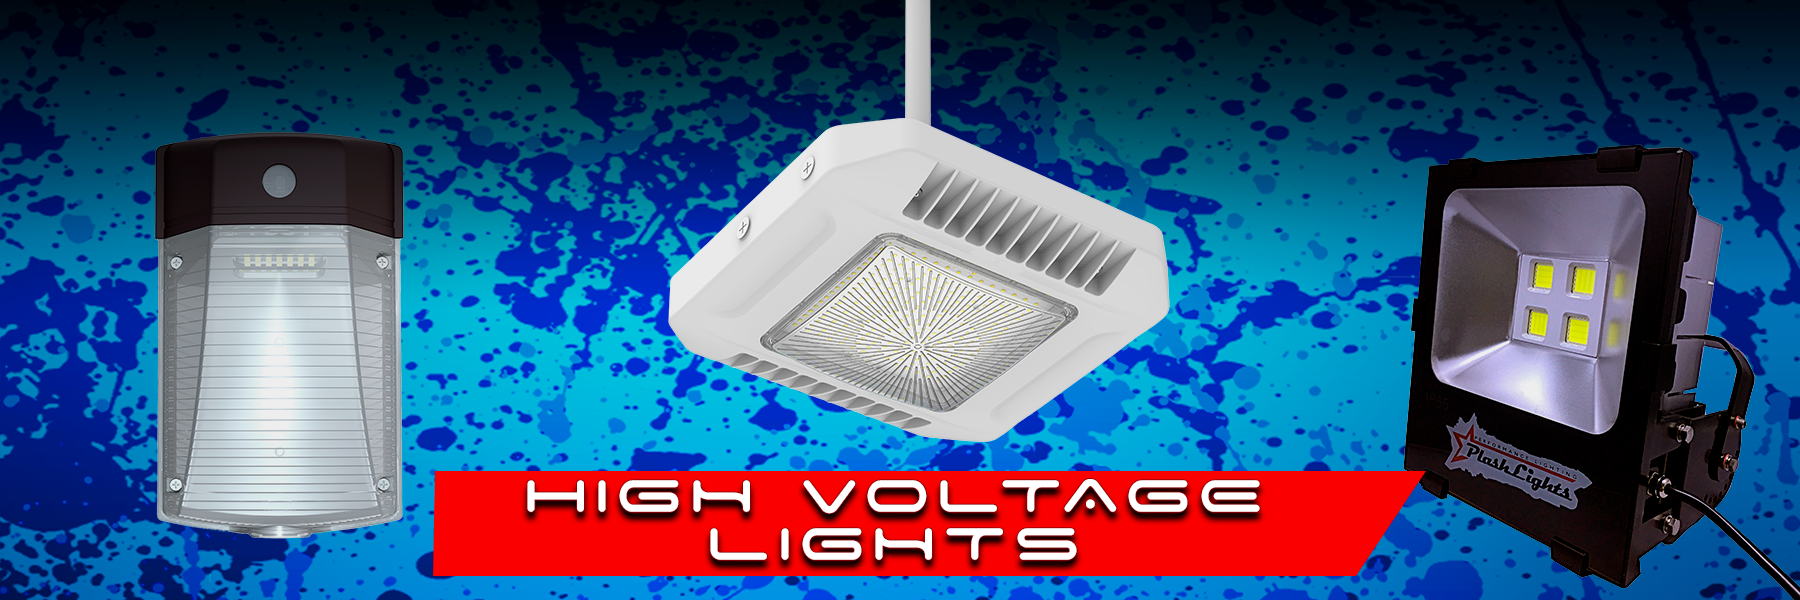 High Voltage Lights